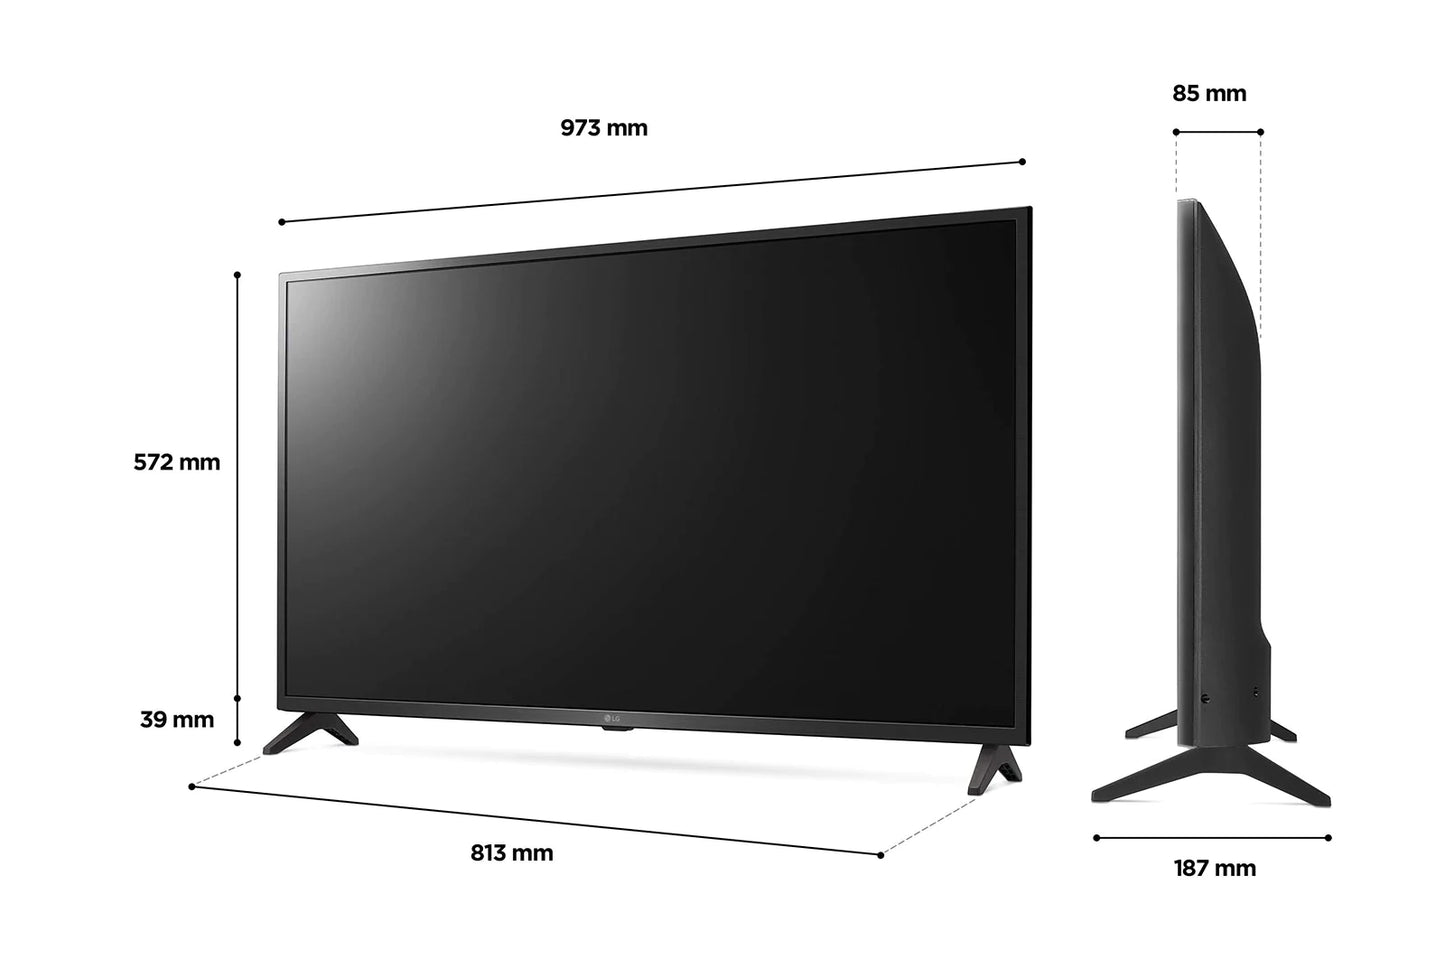 LG 43 inch 43UQ751 LED Series 4K Smart UHD TV with AI ThinQ